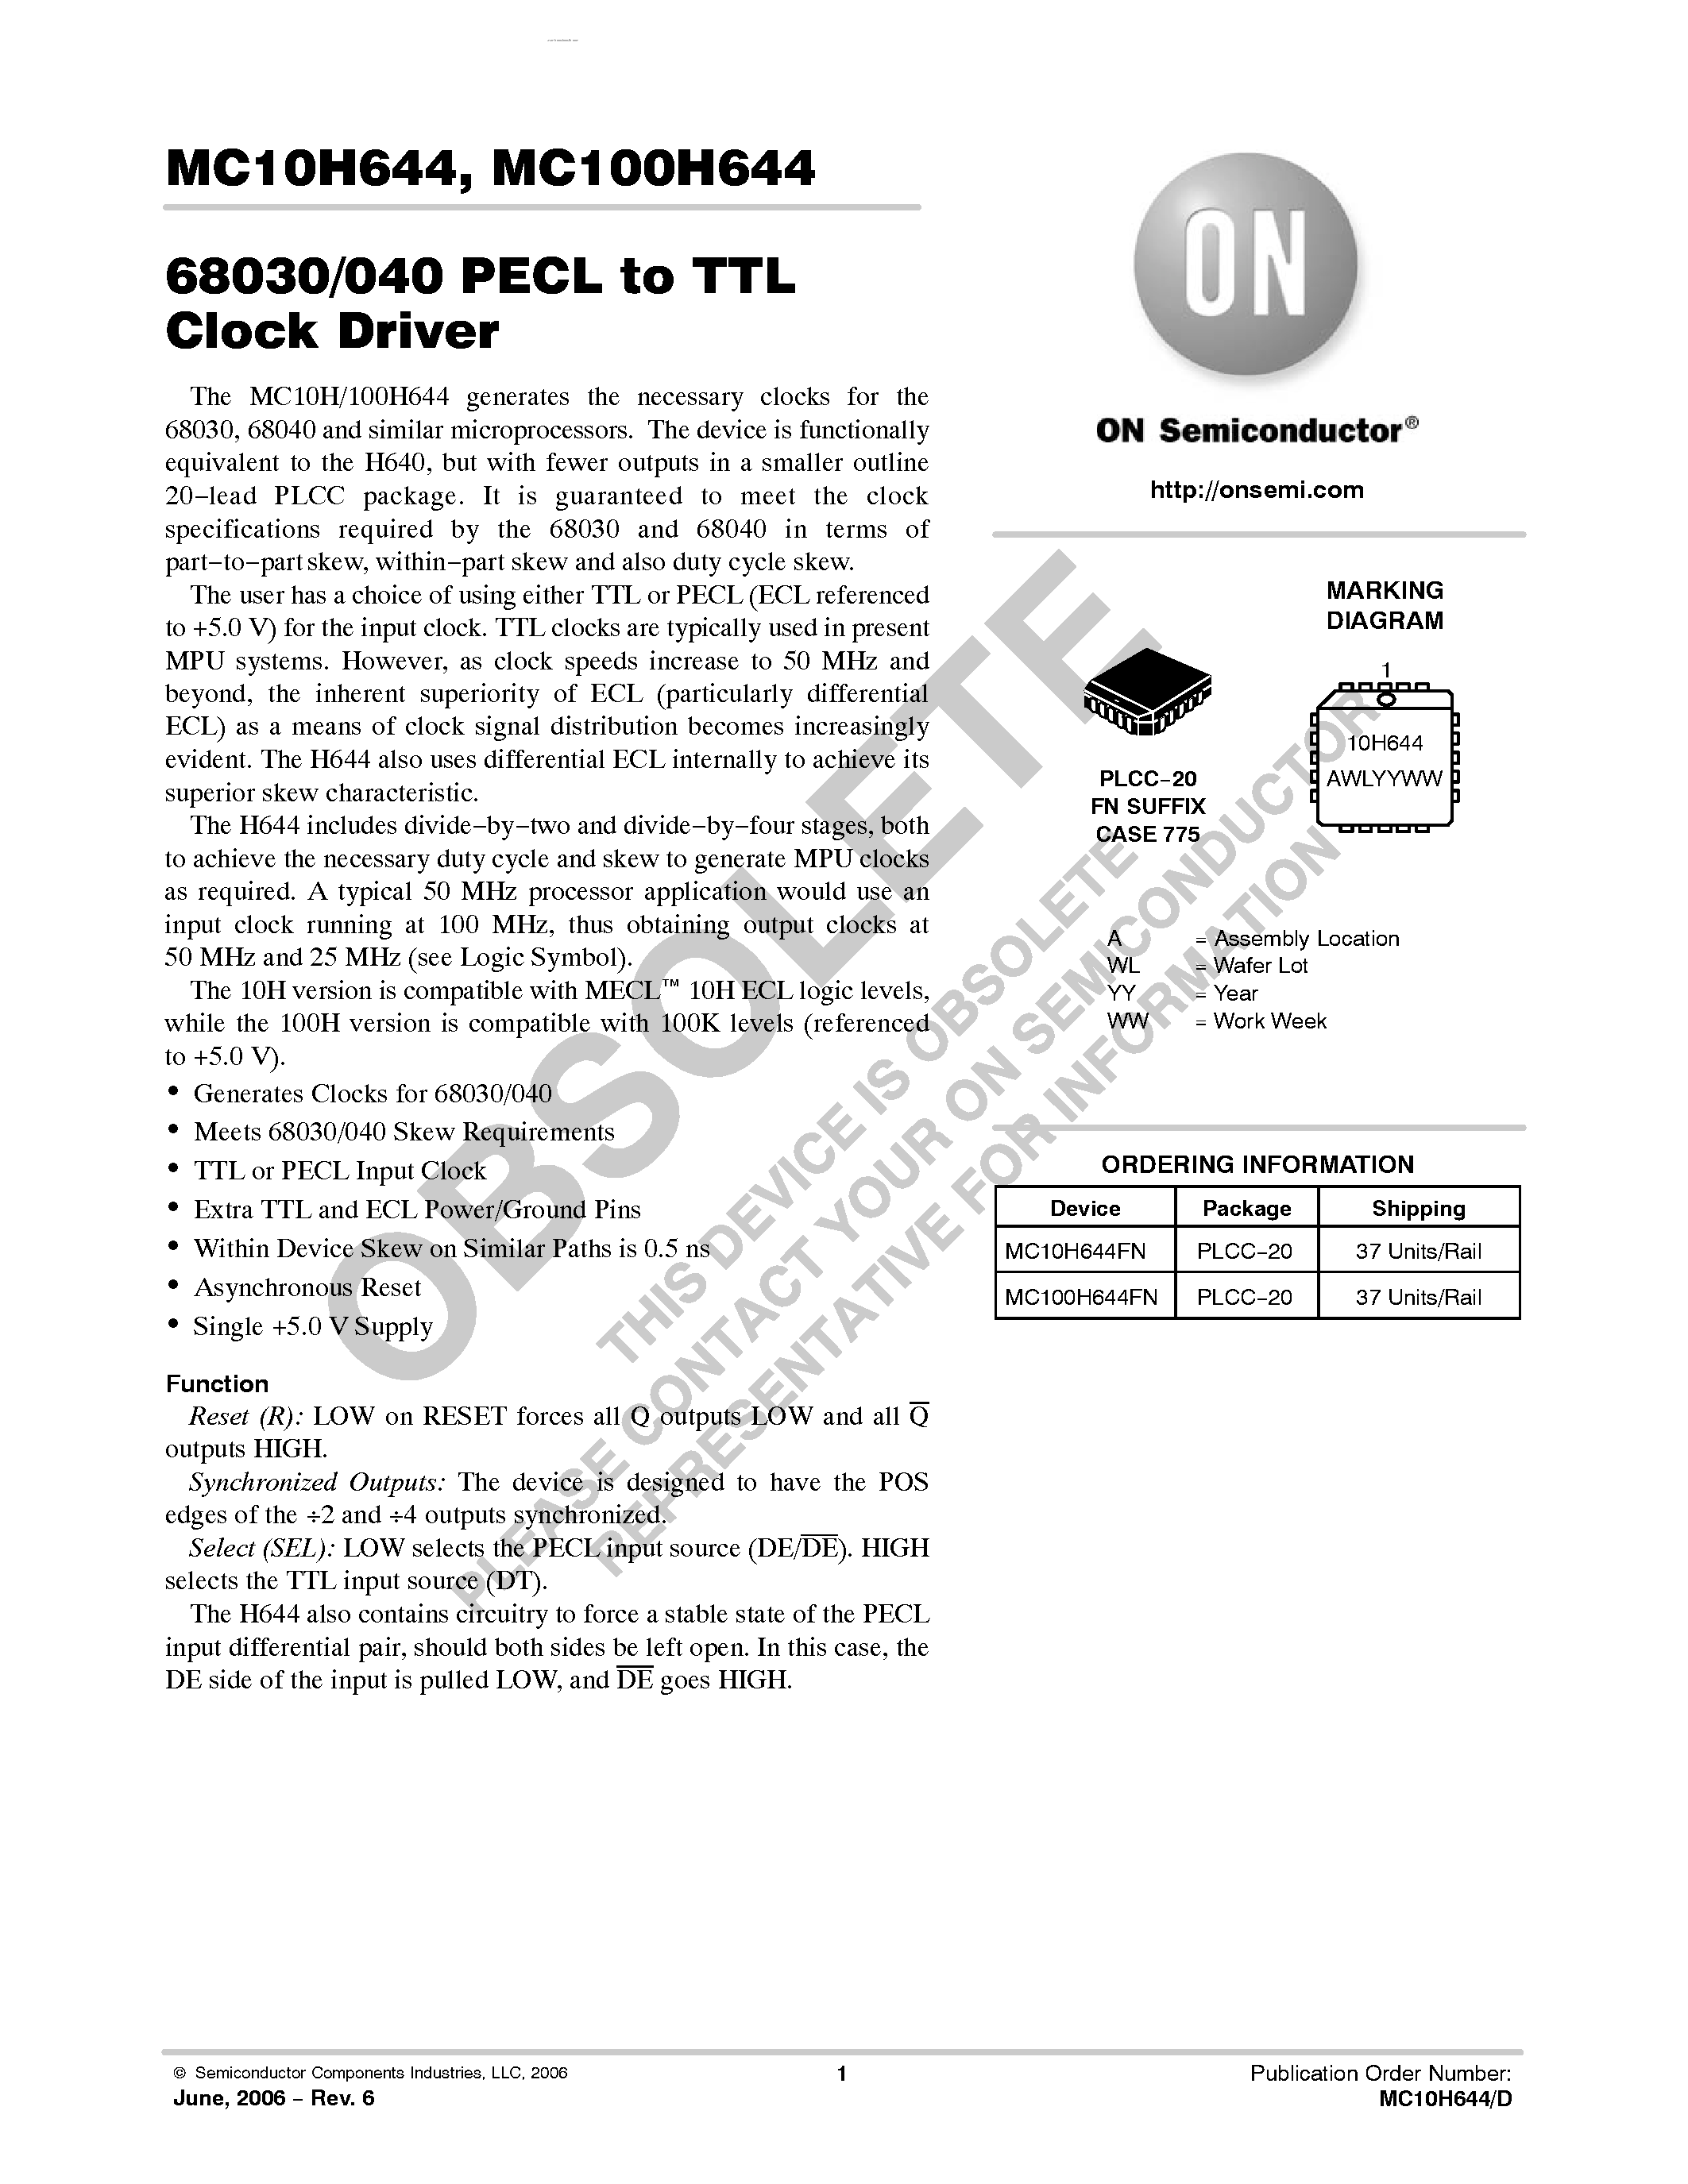 Datasheet MC10H644 - 68030/040 PECL-TTL CLOCK DRIVER page 1